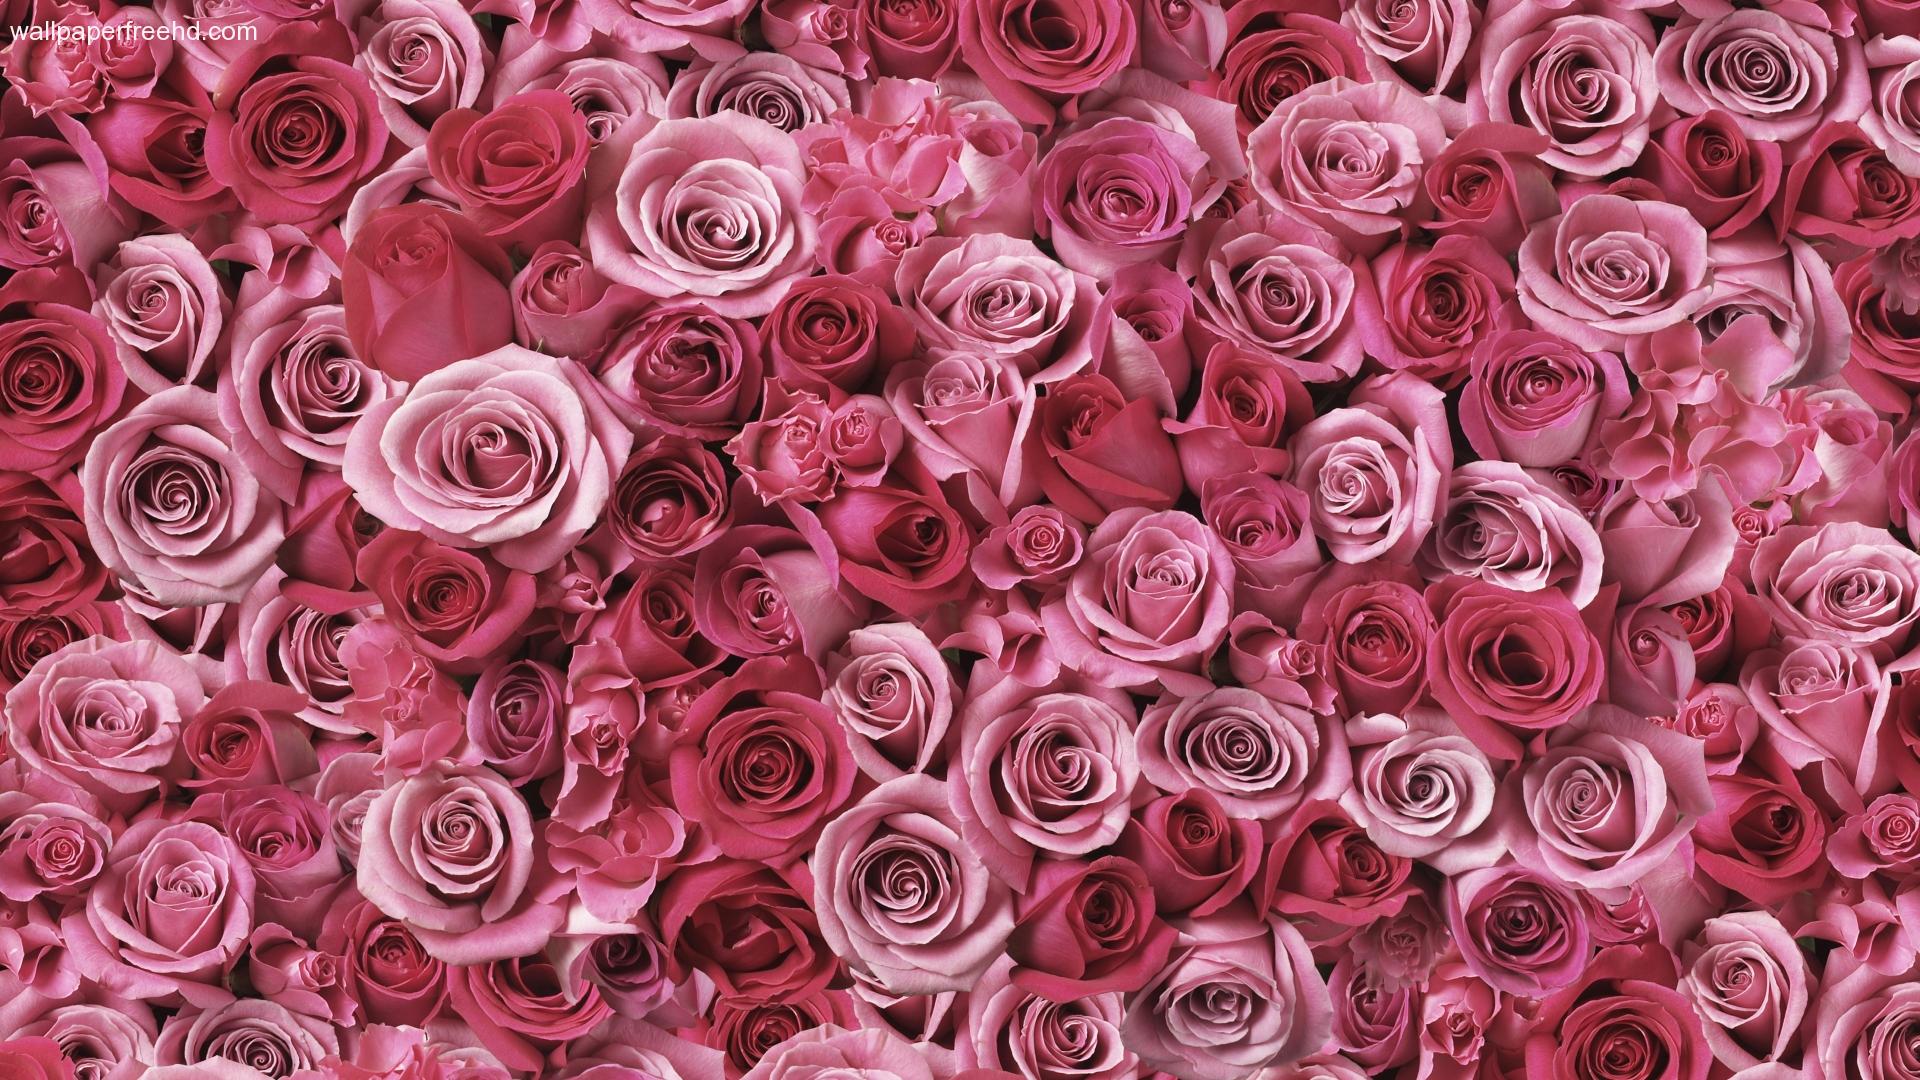 pink-roses-free-hd-desktop-backgrounds.jpg